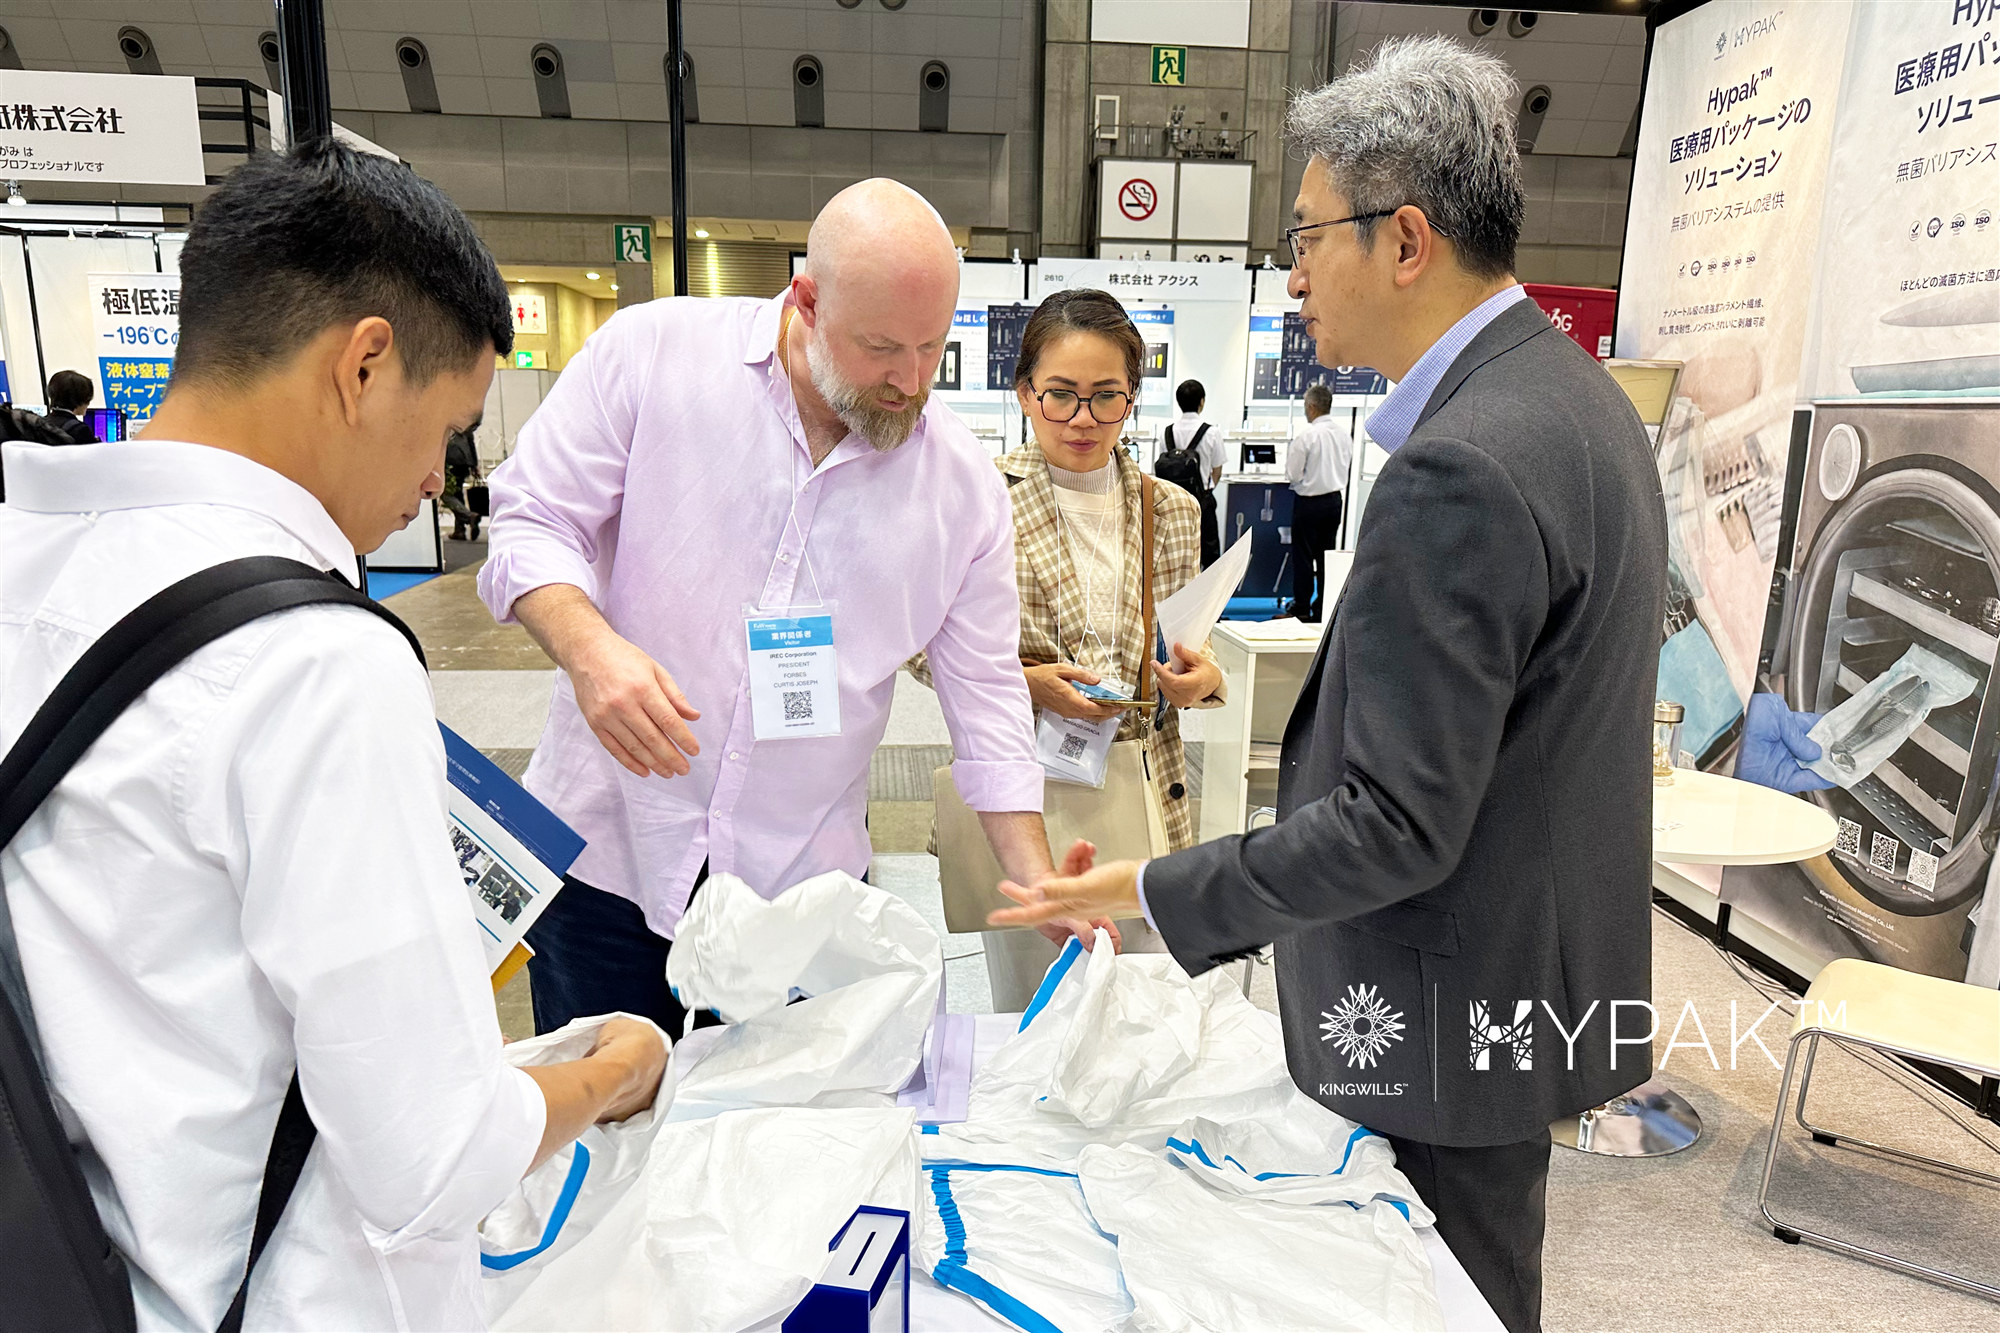 kingwills-unveils-innovative-medical-packaging-solutions-at-medtec-japan-27.jpg